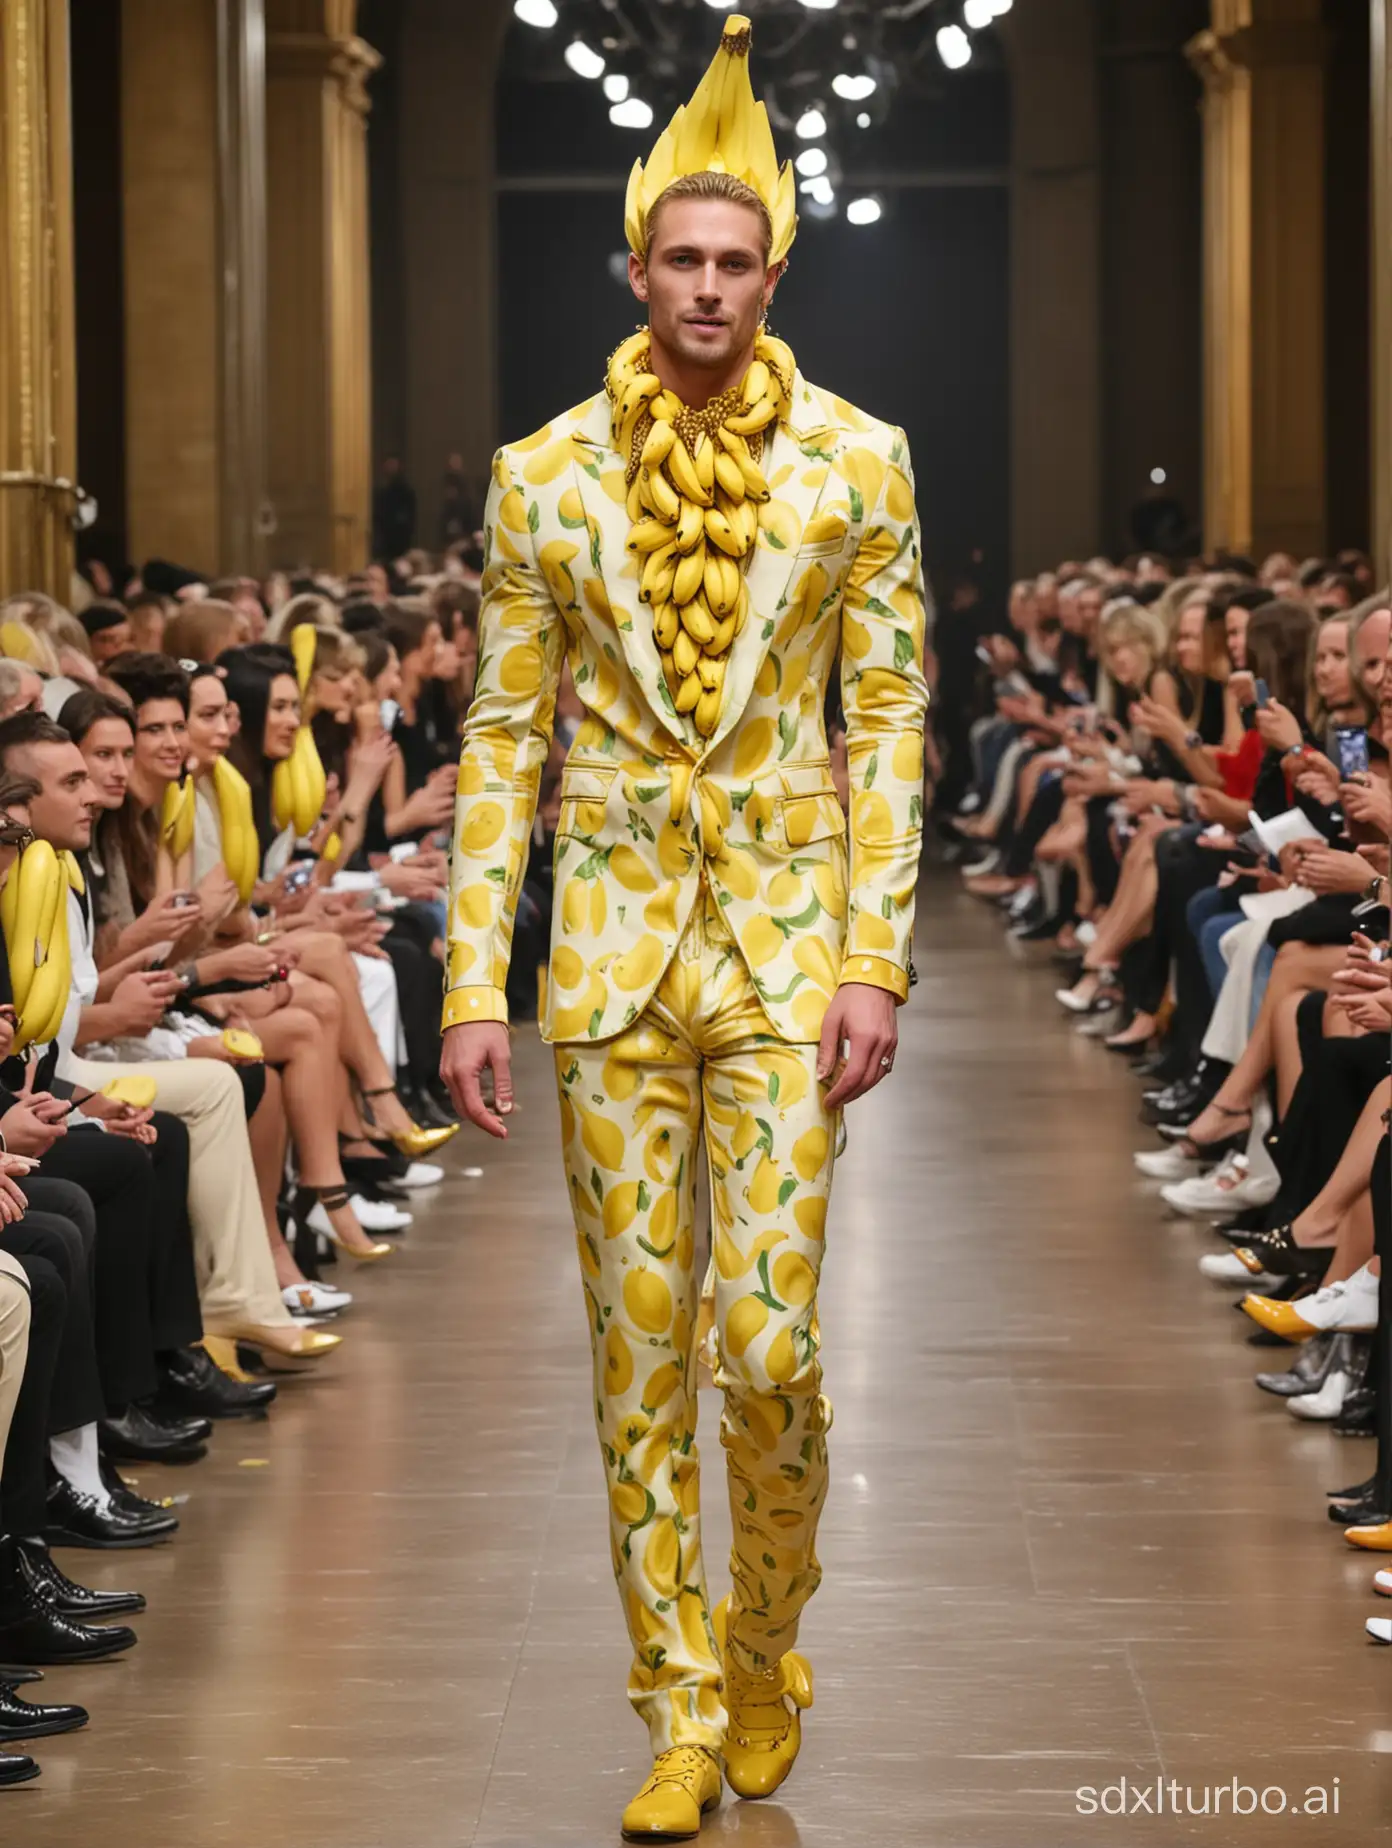 Eccentric-Fashion-Sensational-Male-Model-Struts-in-Banana-Couture-at-Paris-Collection-Runway